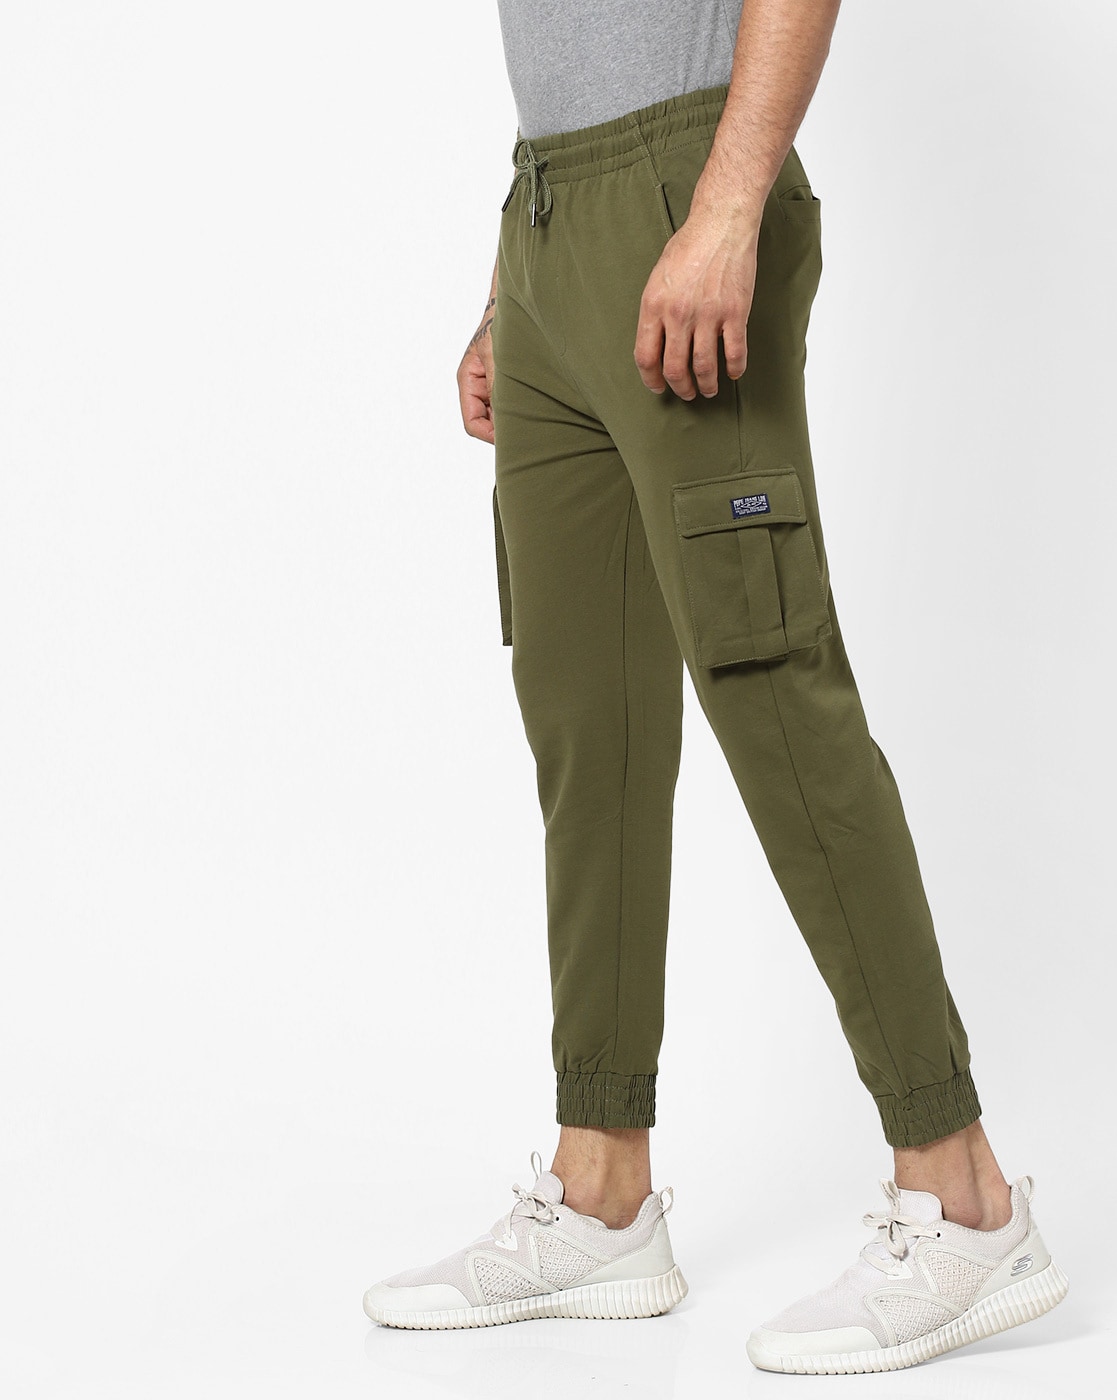 Pepe Jeans SEAN - Cargo trousers - olive green/green - Zalando.de